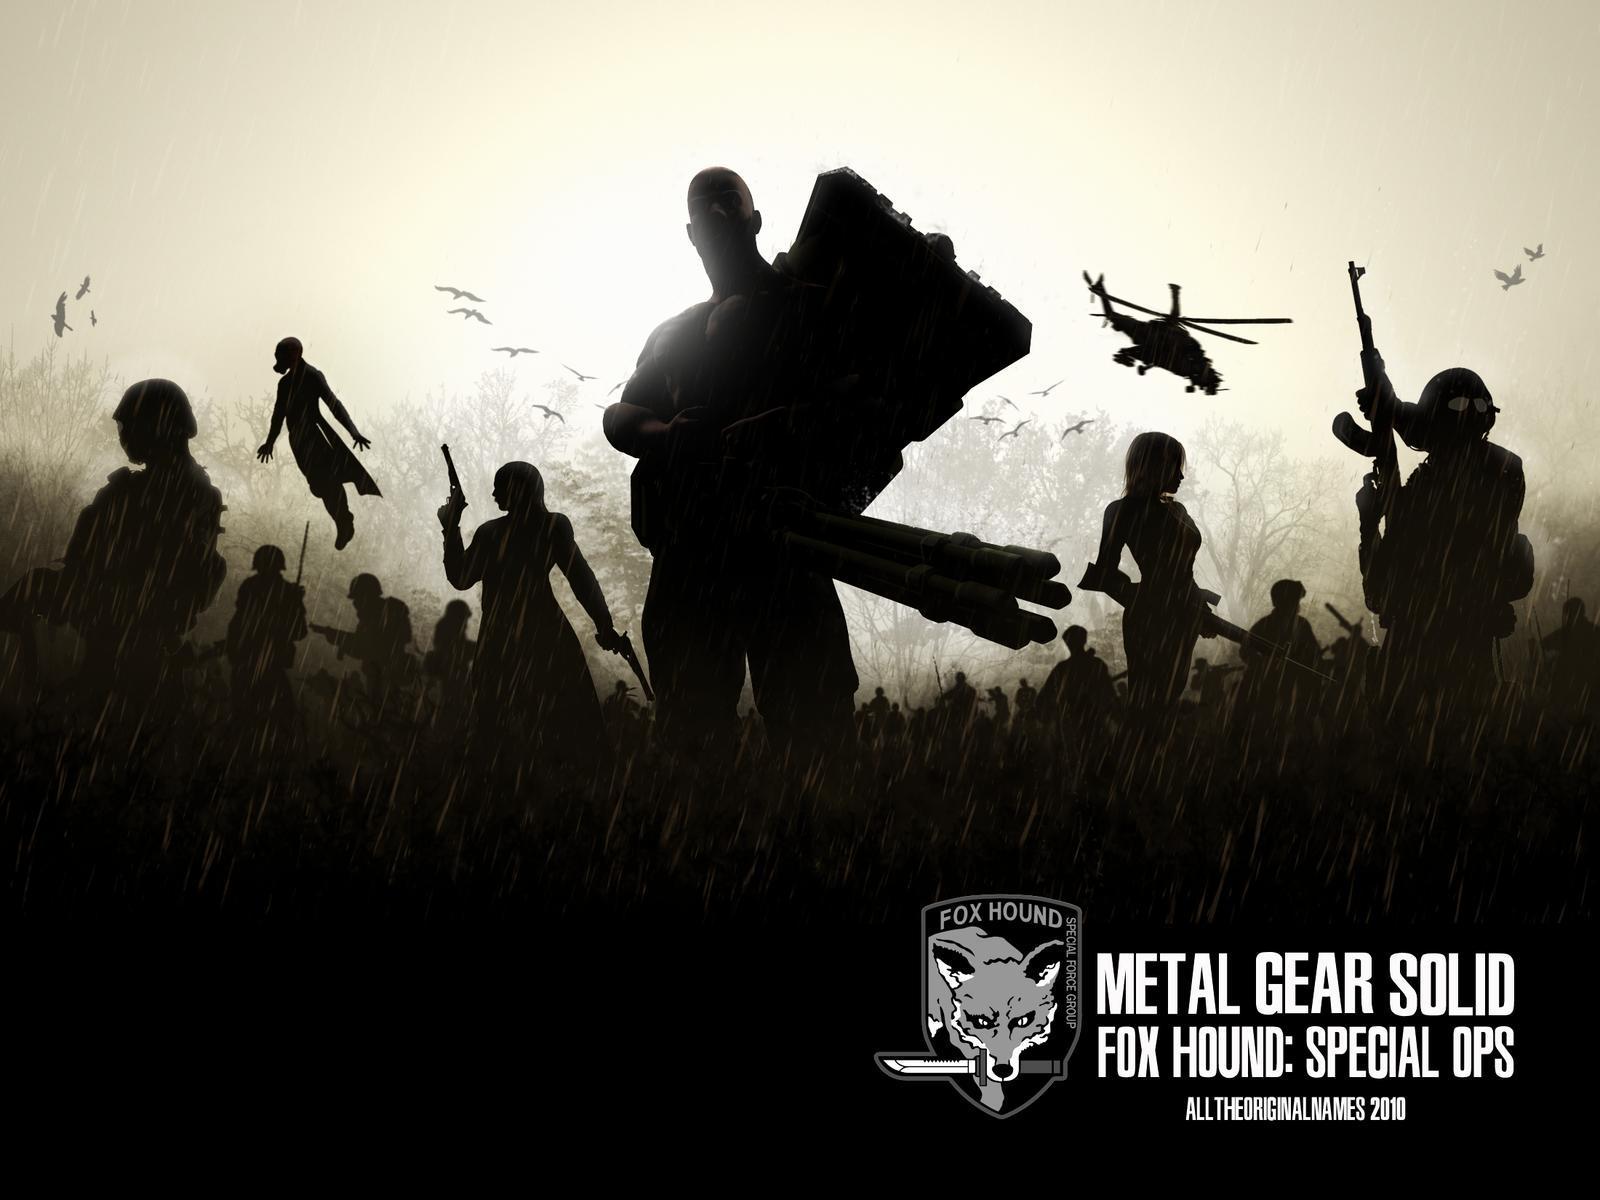 Foxhound Metal Gear Solid wallpaper 123325